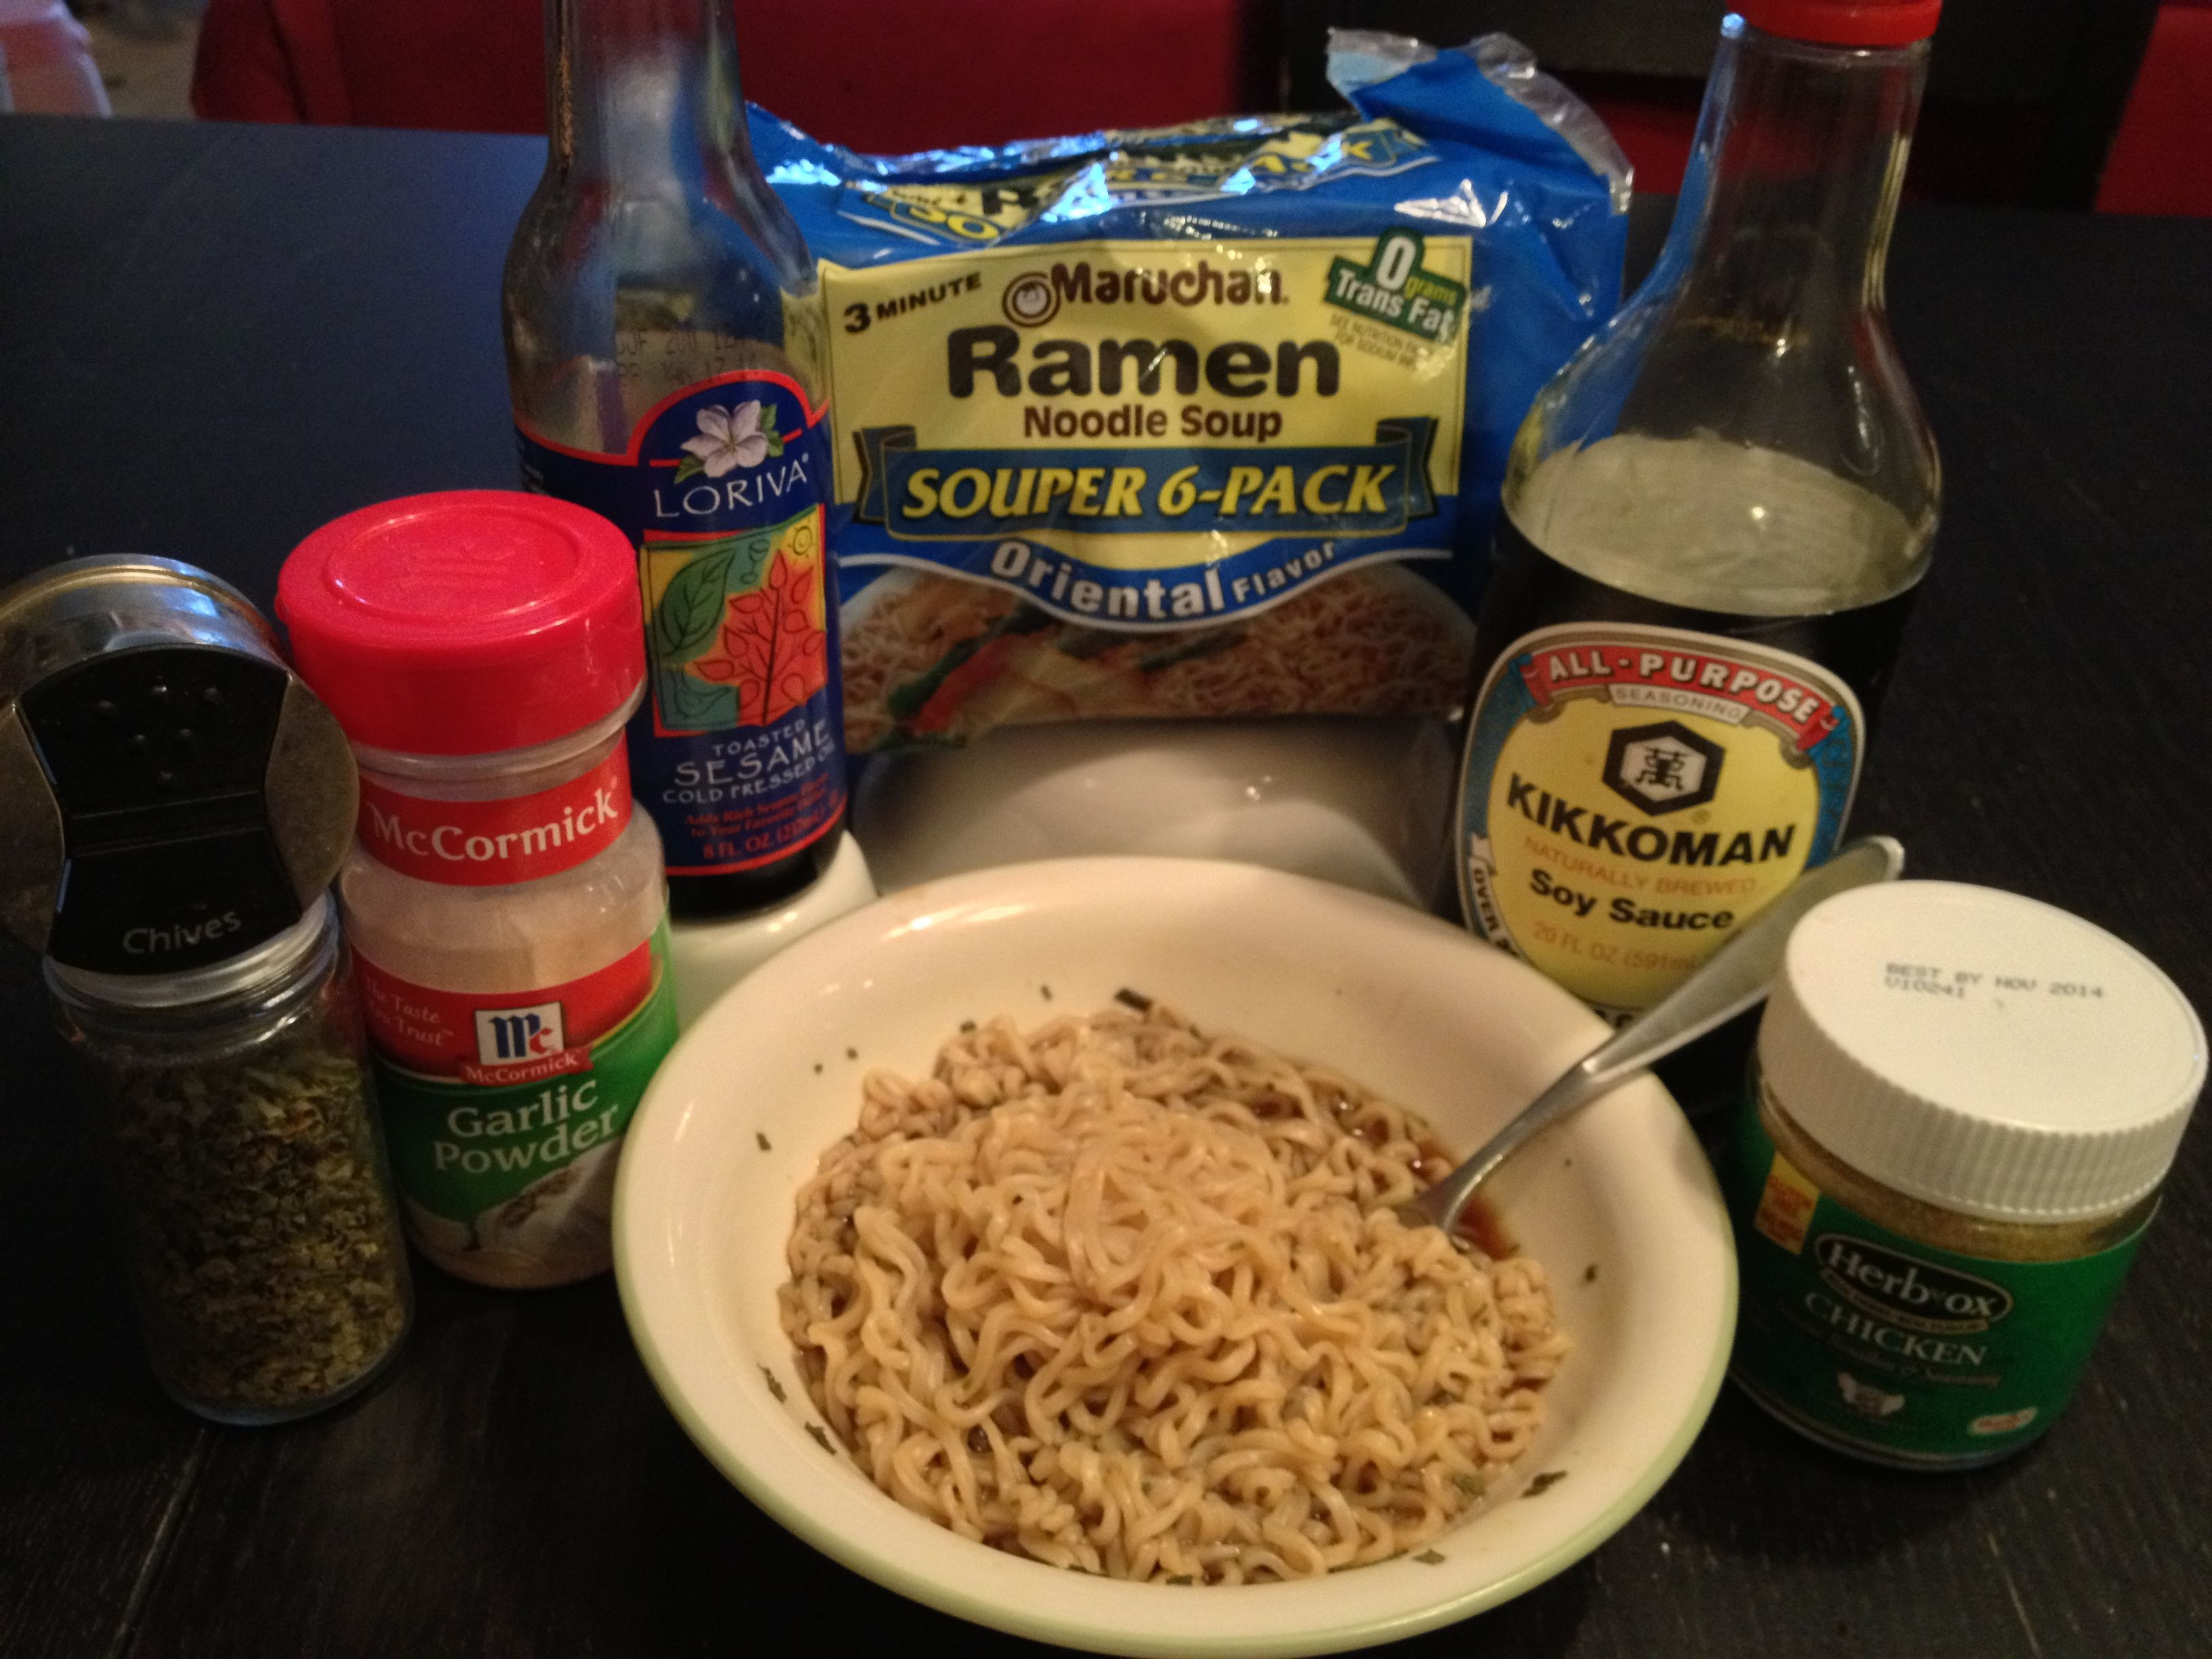 Best ideas about DIY Ramen Seasoning
. Save or Pin homemade ramen noodles seasoning Now.